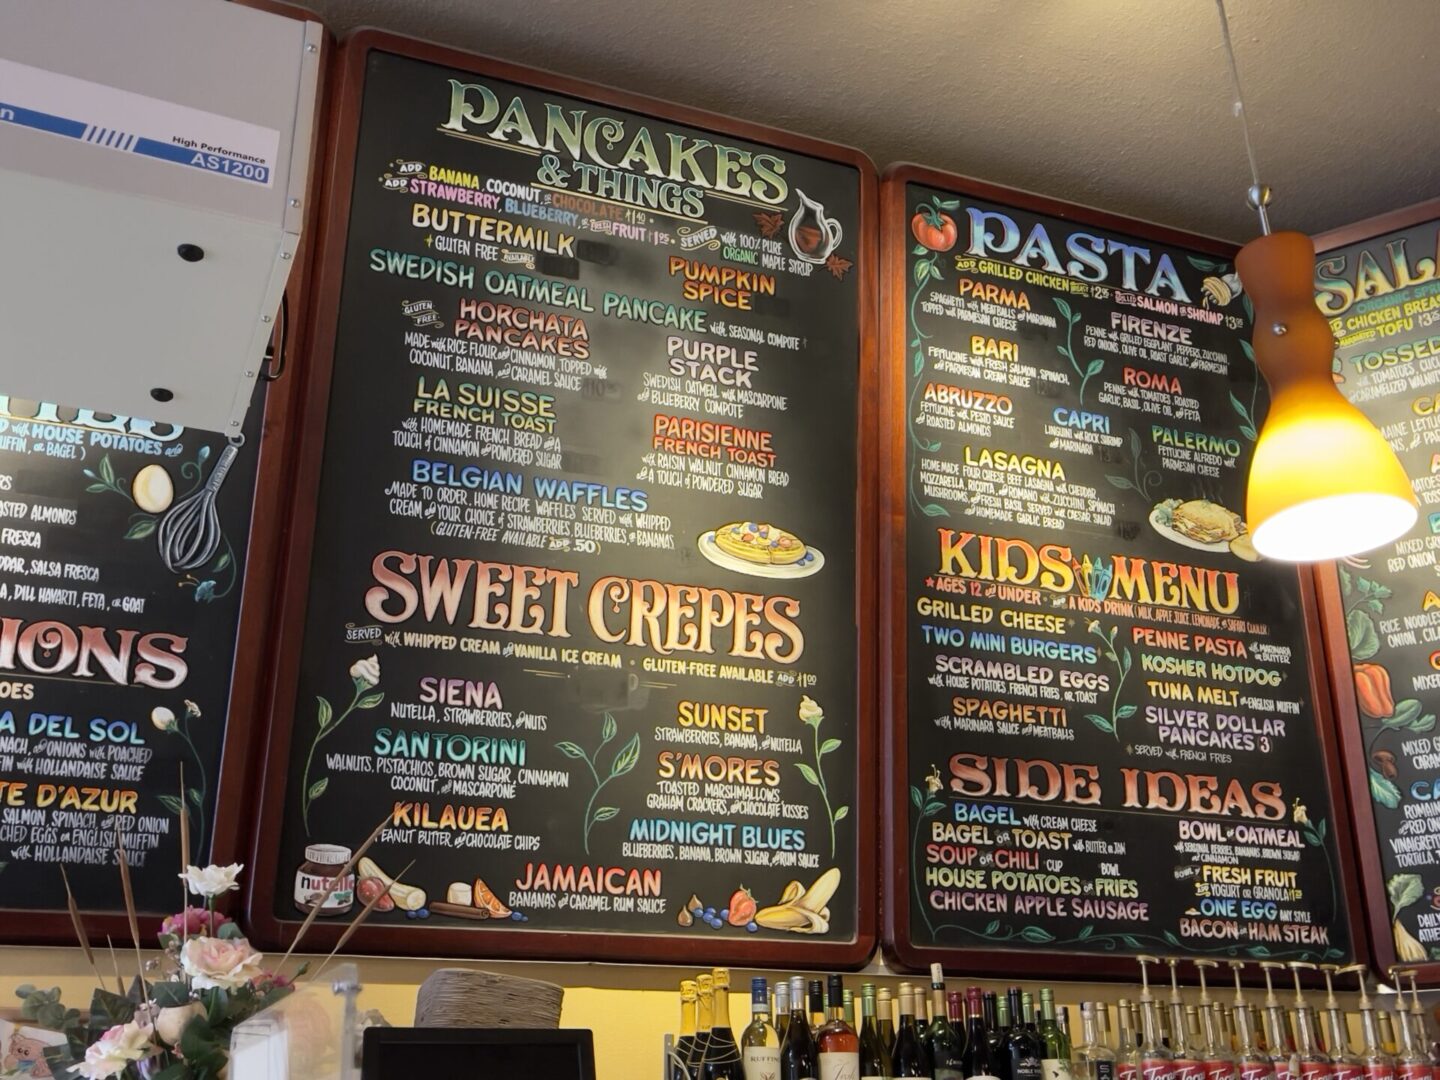 A chalkboard menu is displayed in a restaurant.